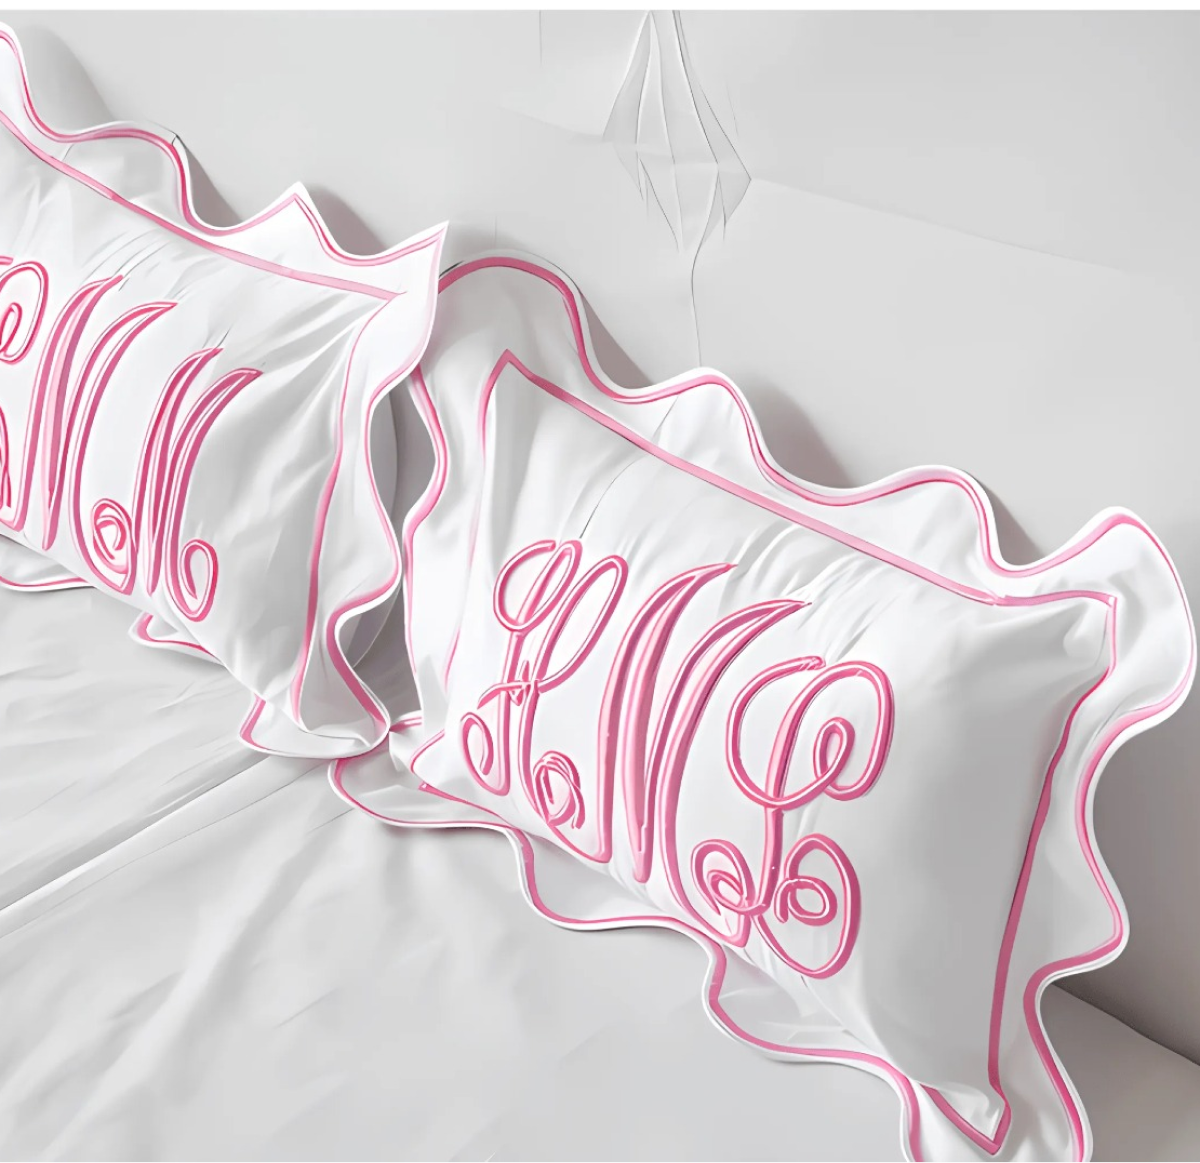 Monogram Pillow Covers Image